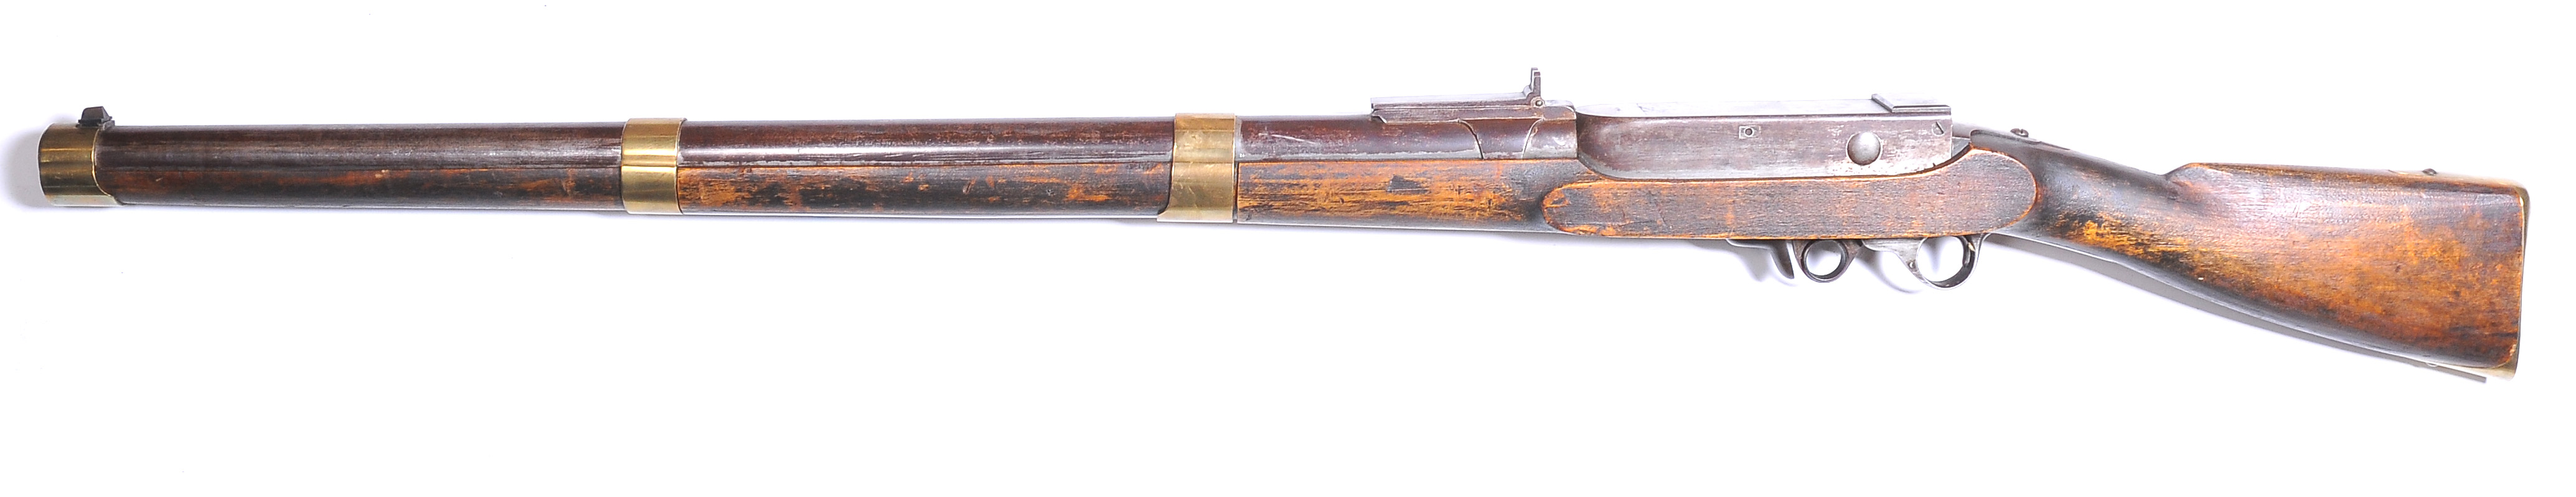 ./guns/rifle/bilder/Rifle-Kongsberg-Vollgrav-1856-1.jpg